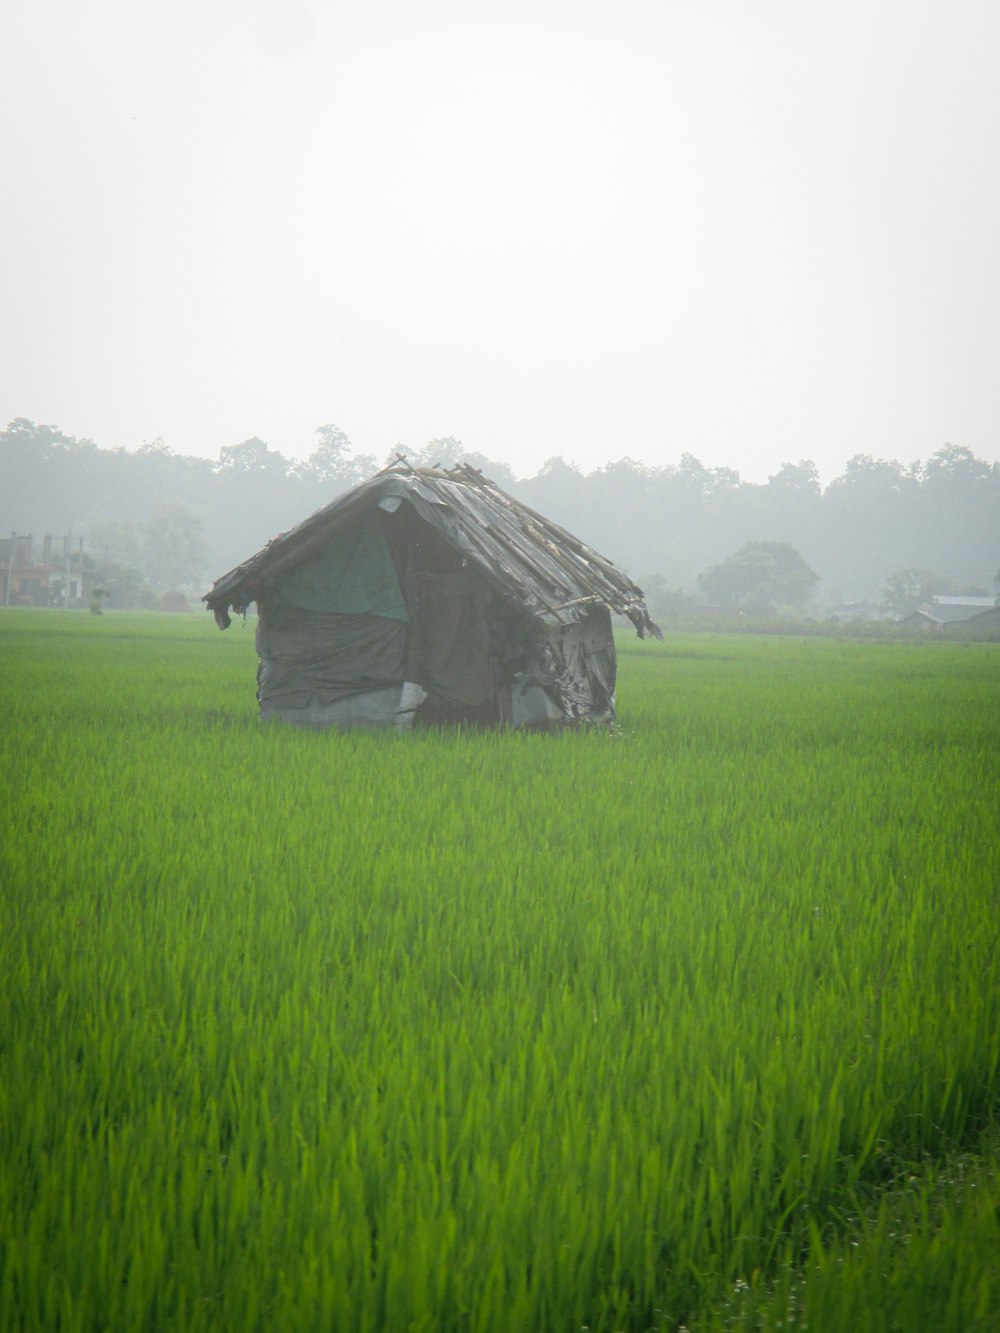 a hut in a field of green grass